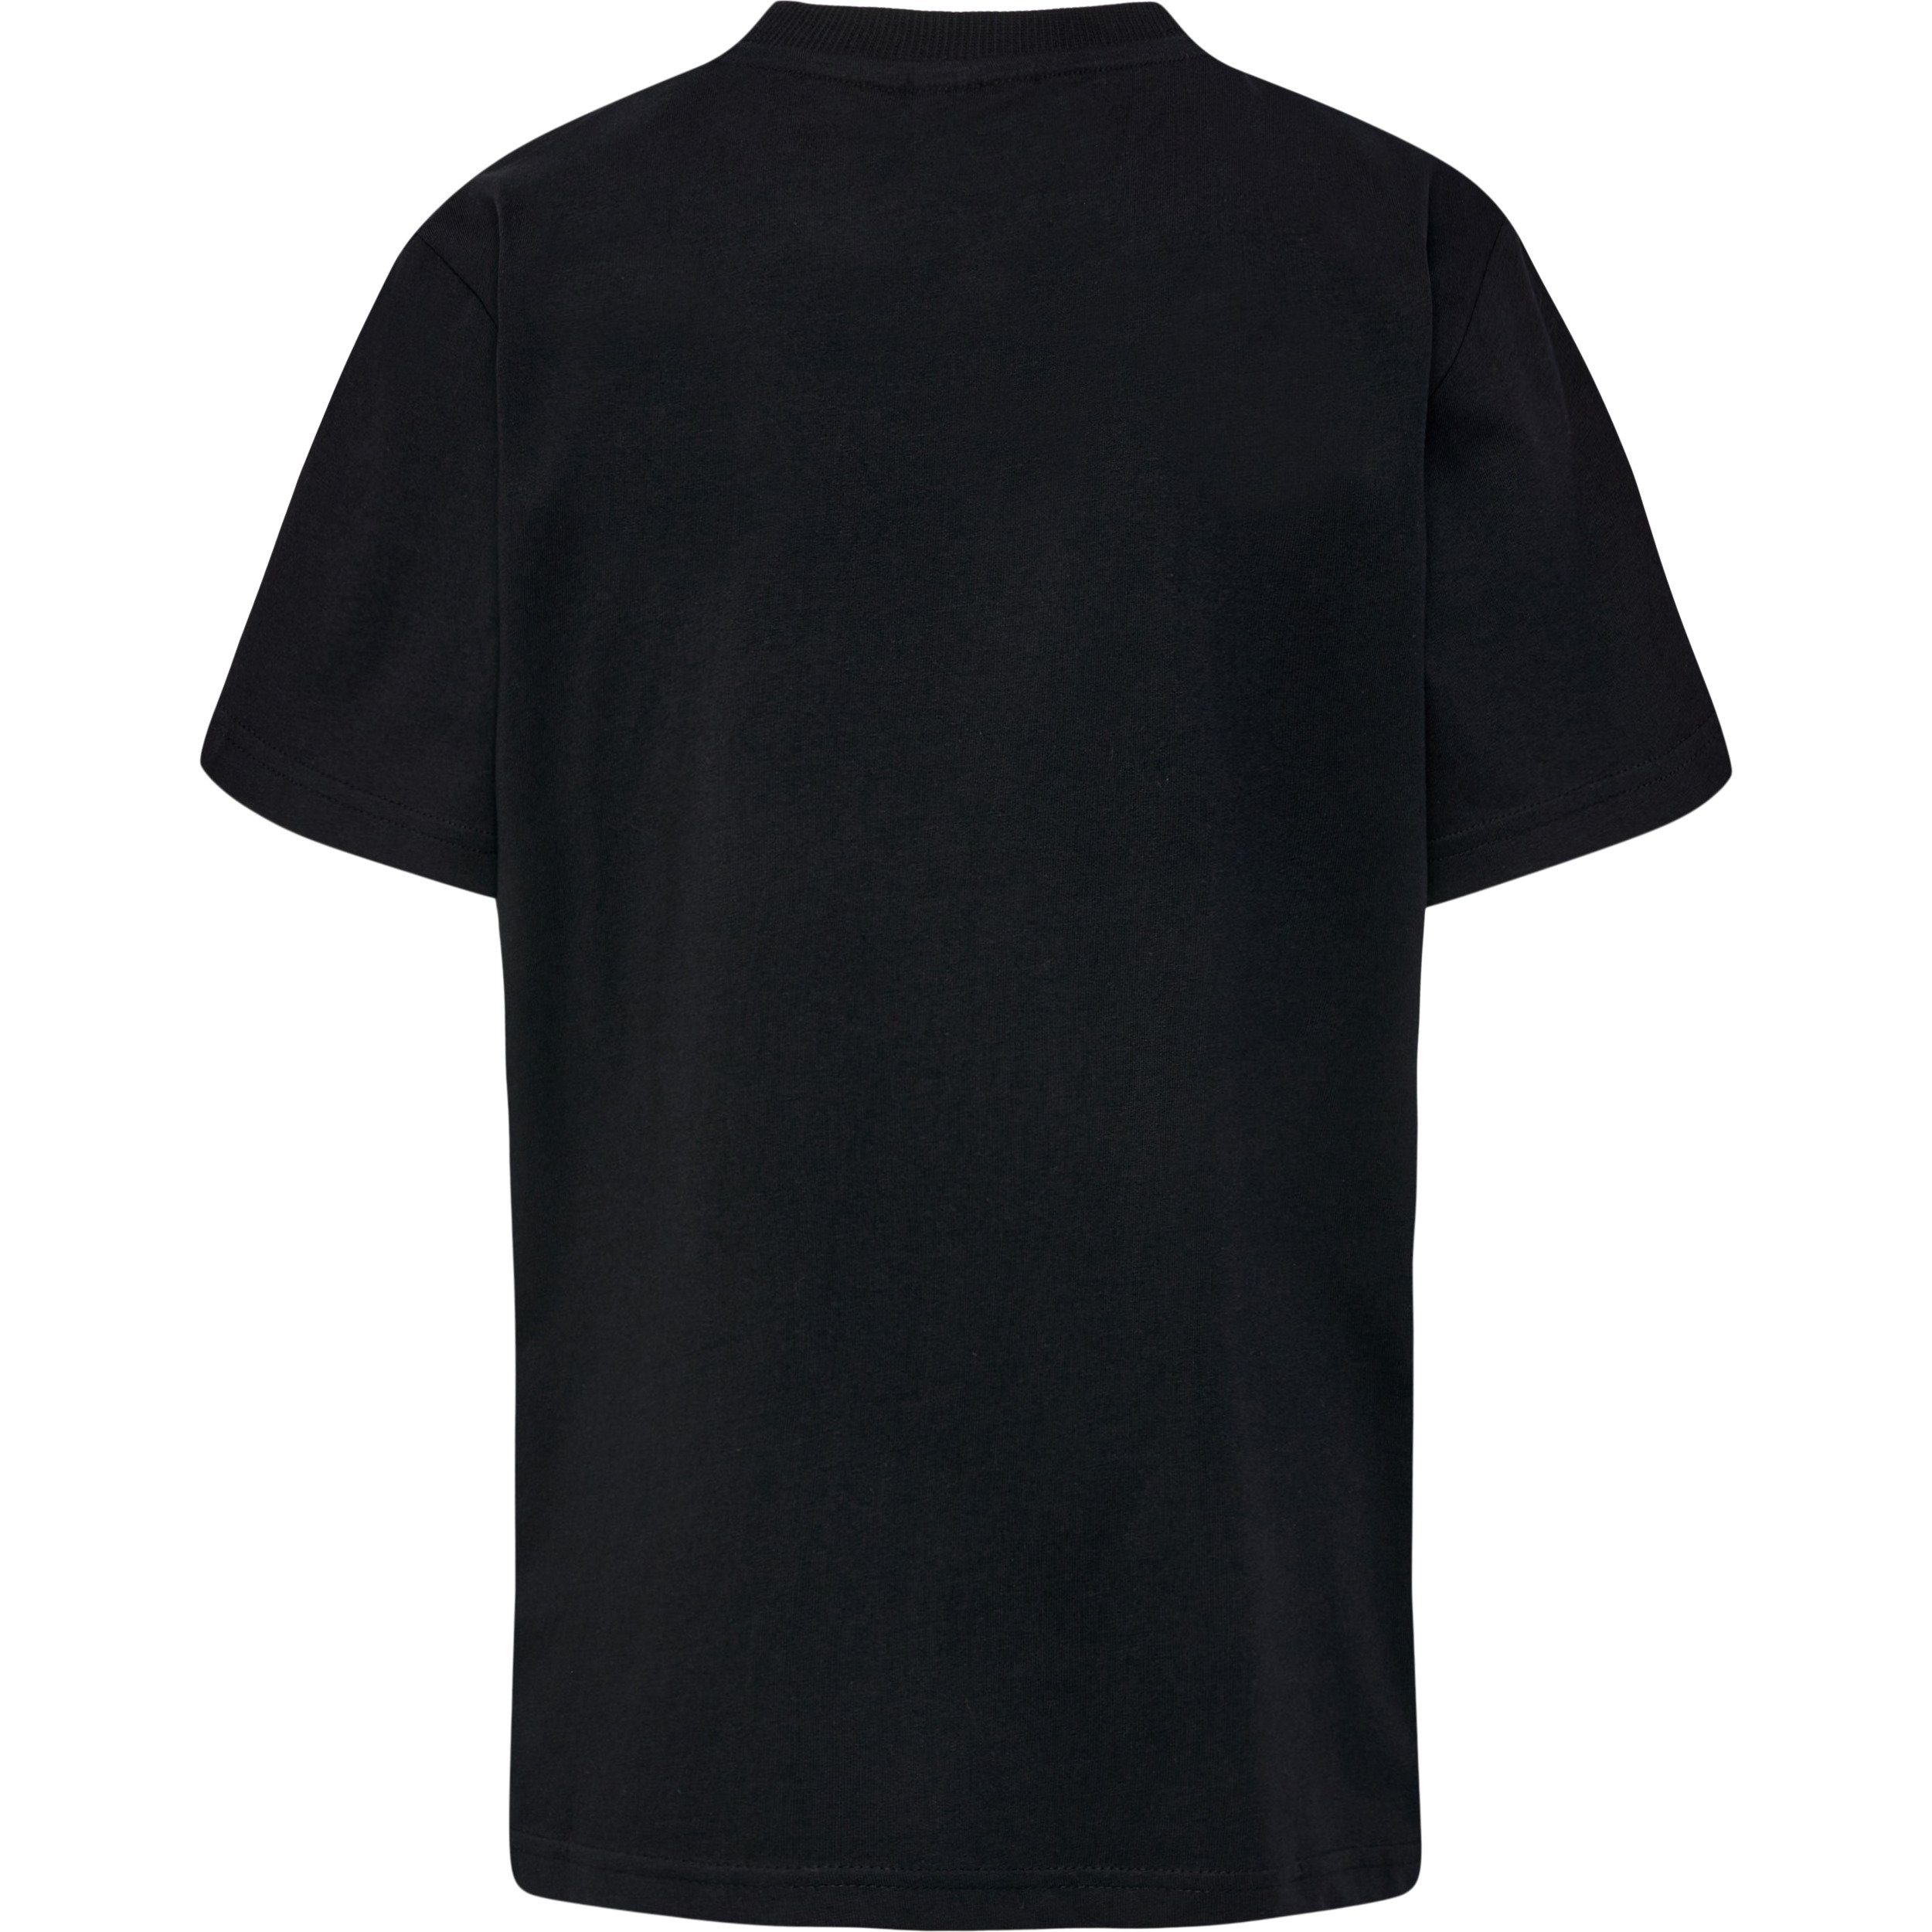 Kinder - T-Shirt für T-SHIRT Sleeve DARE Short black hummel